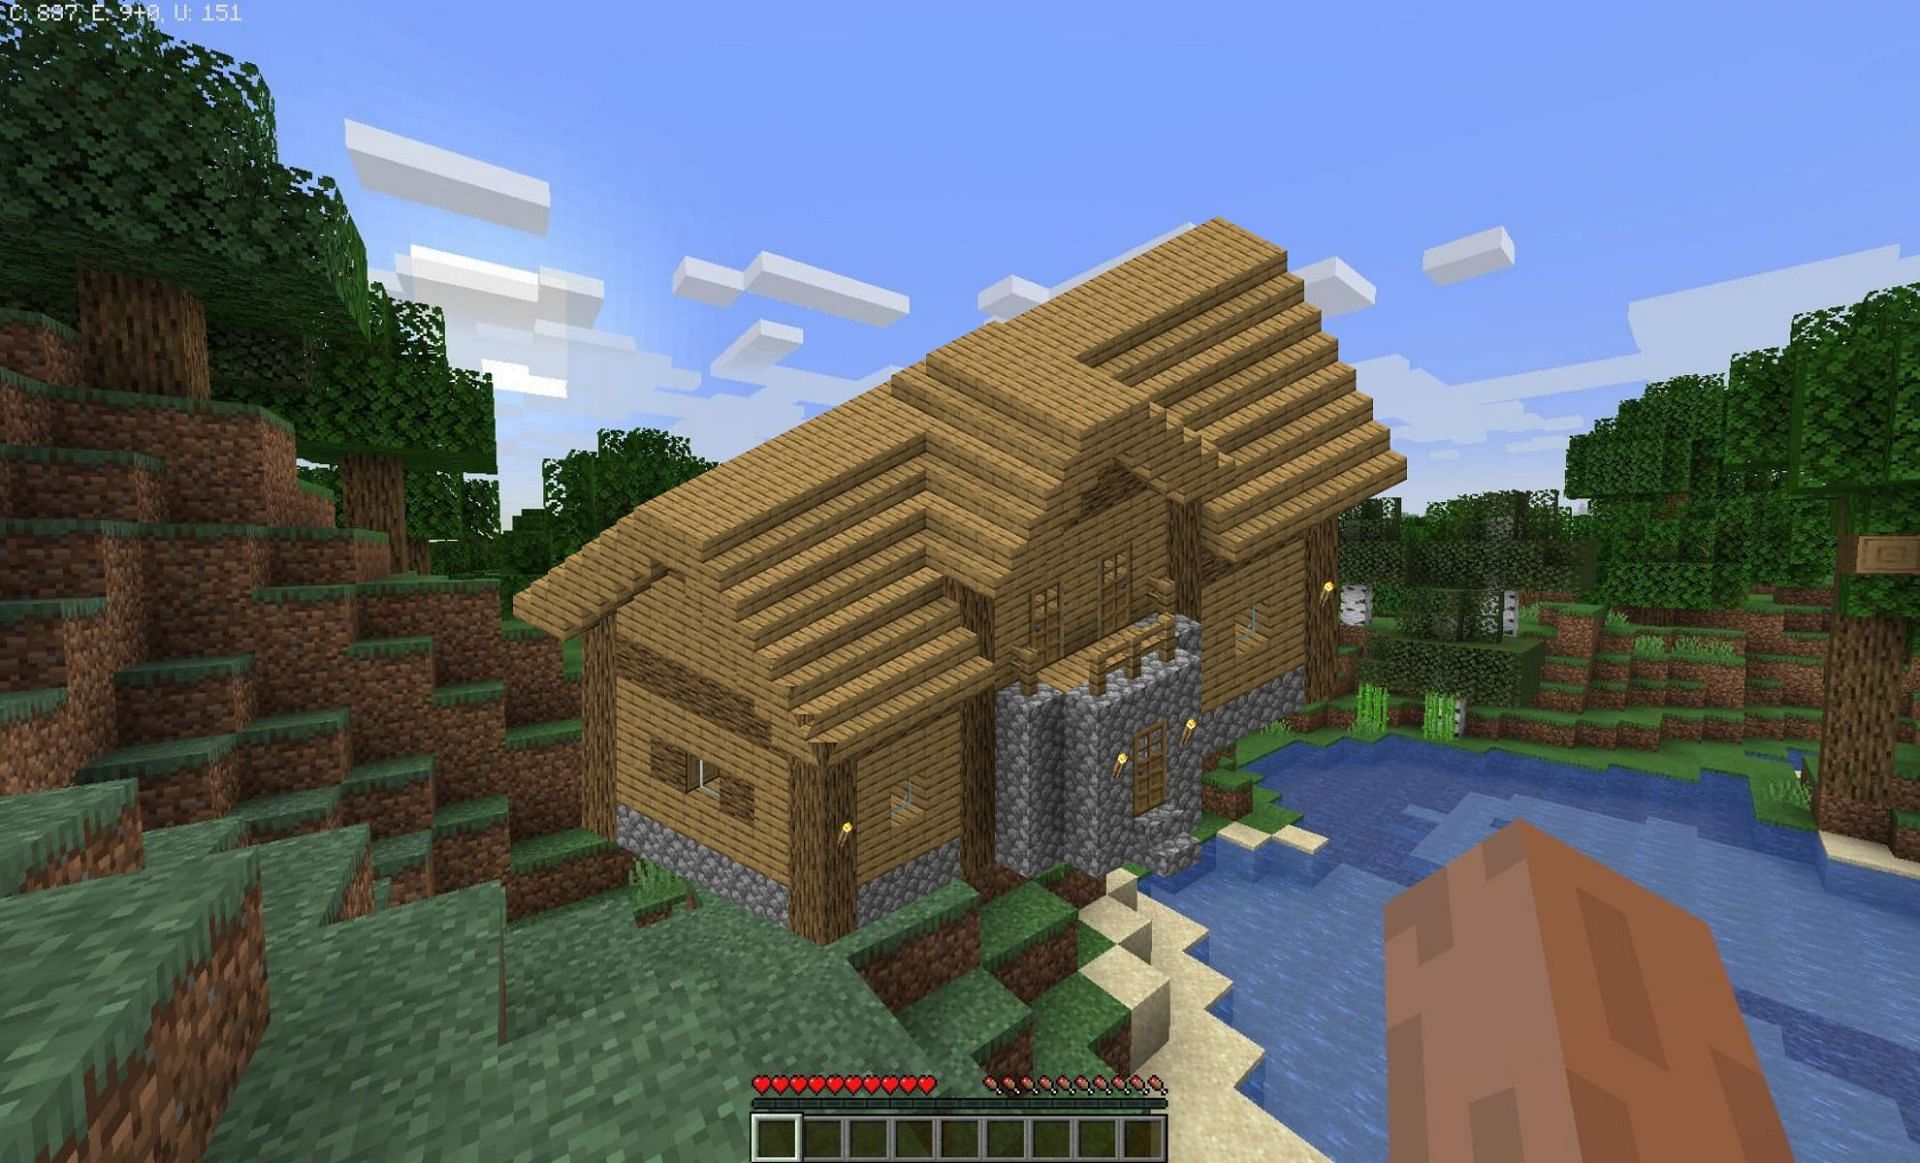 Library 1 (Image via Minecraft Wiki)